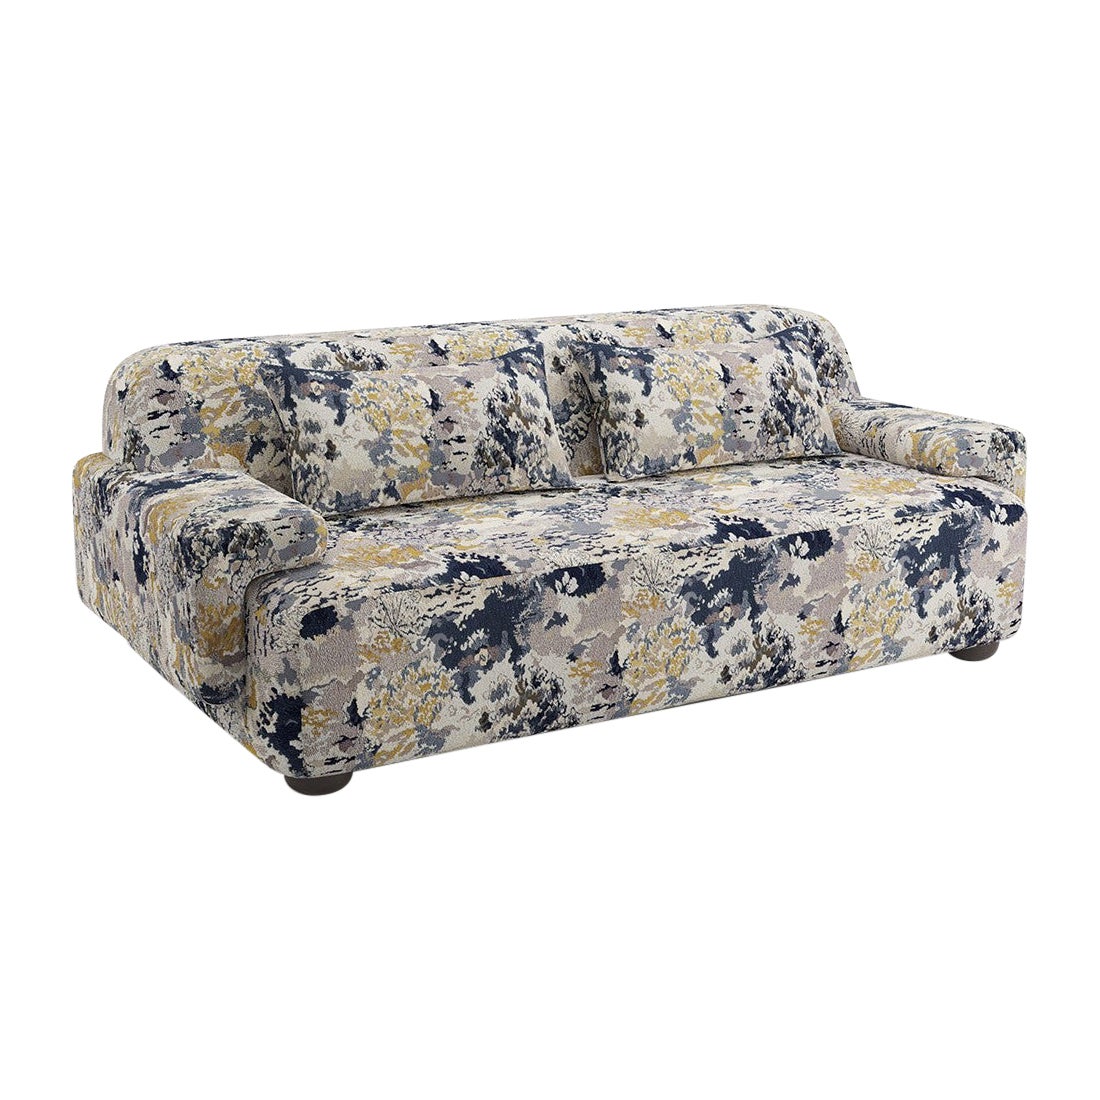 Popus Editions Lena 3-Seater Sofa in Indigo Marrakech Jacquard Upholstery